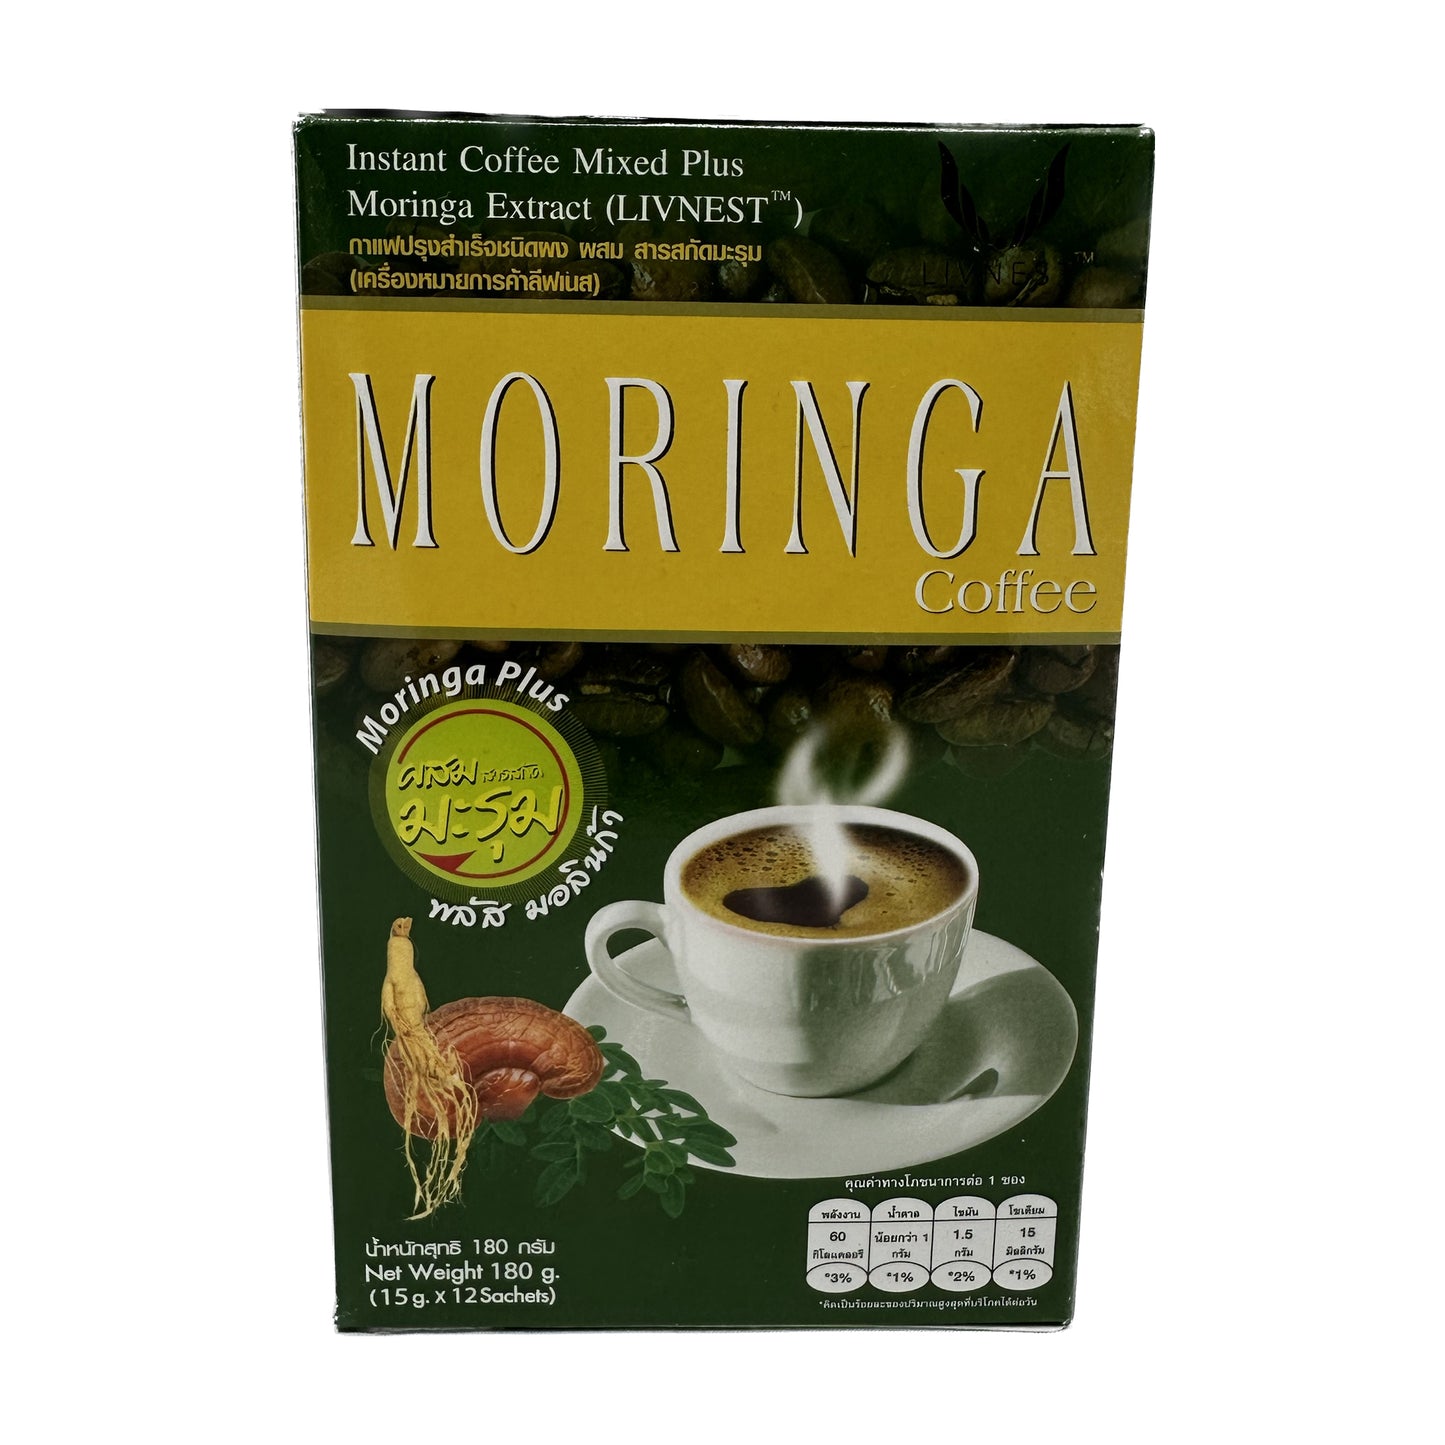 Instant Coffee Mixed Plus Moringa Extract (Livnest) กาแฟปรุงสำเร็จชนิดผงผสมมะรุม ตราลีฟเนส - 180g